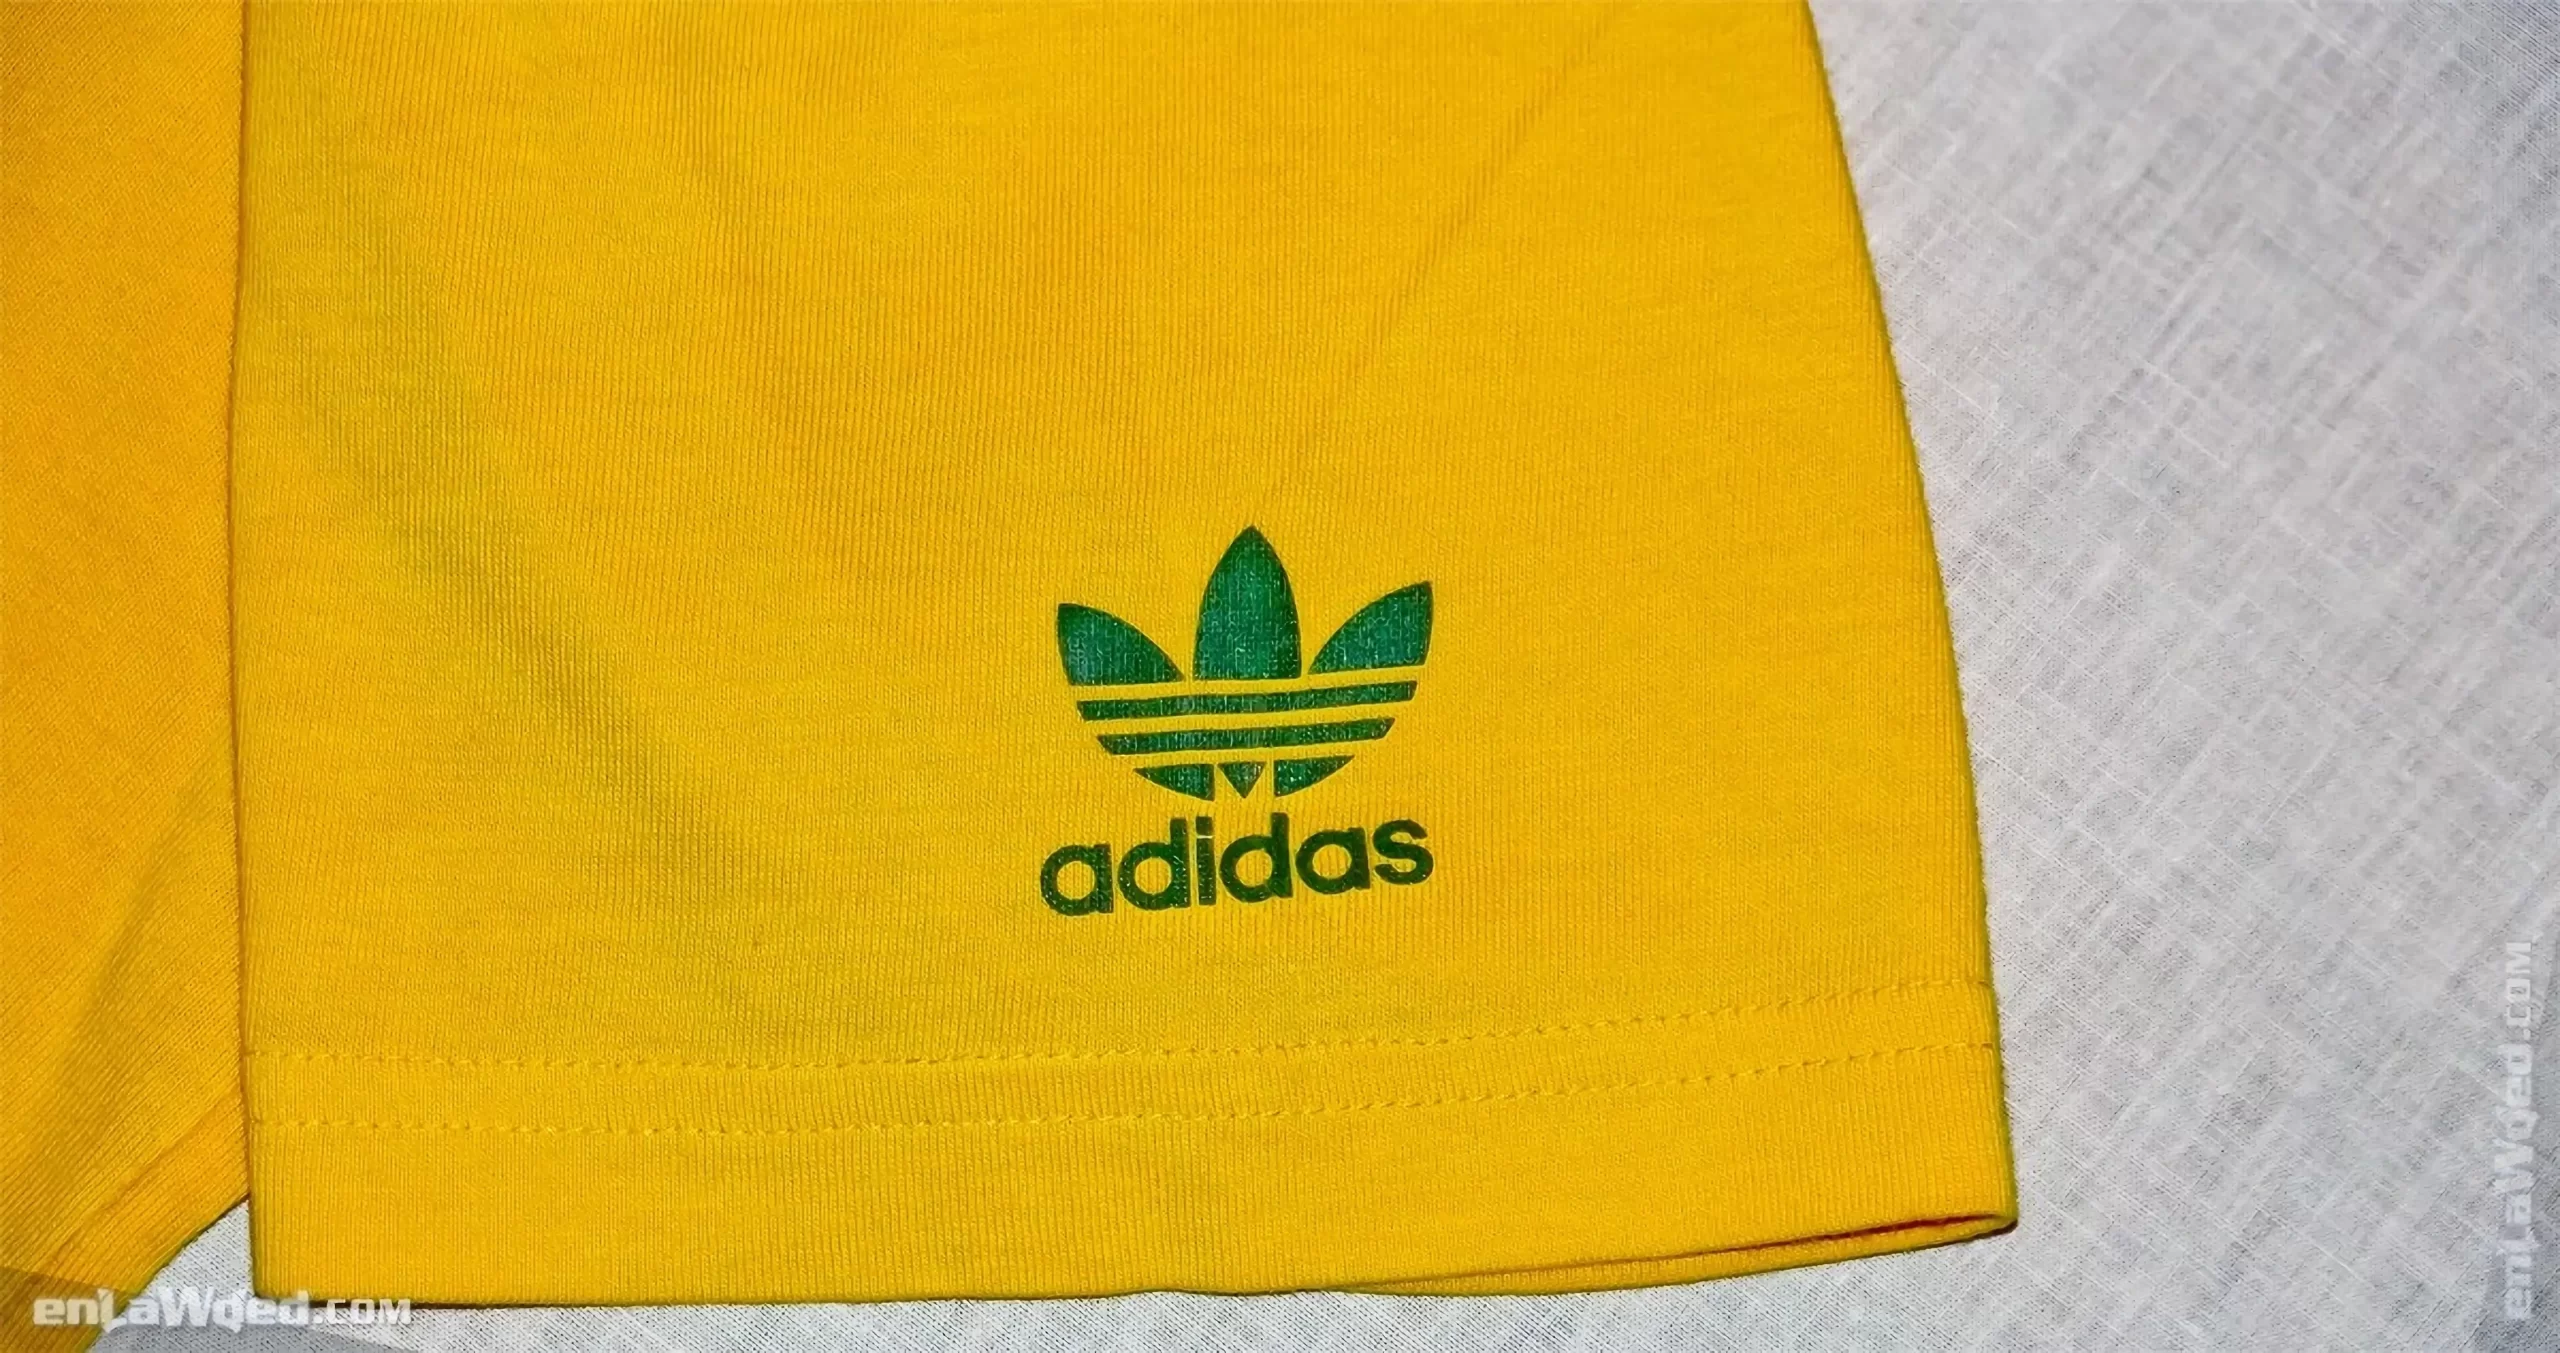 Men’s 2006 Brazil ’50 FIFA World Cup T-Shirt by Adidas: Comprehensive (EnLawded.com file #lmc3ztdlkyj8t8eufp)